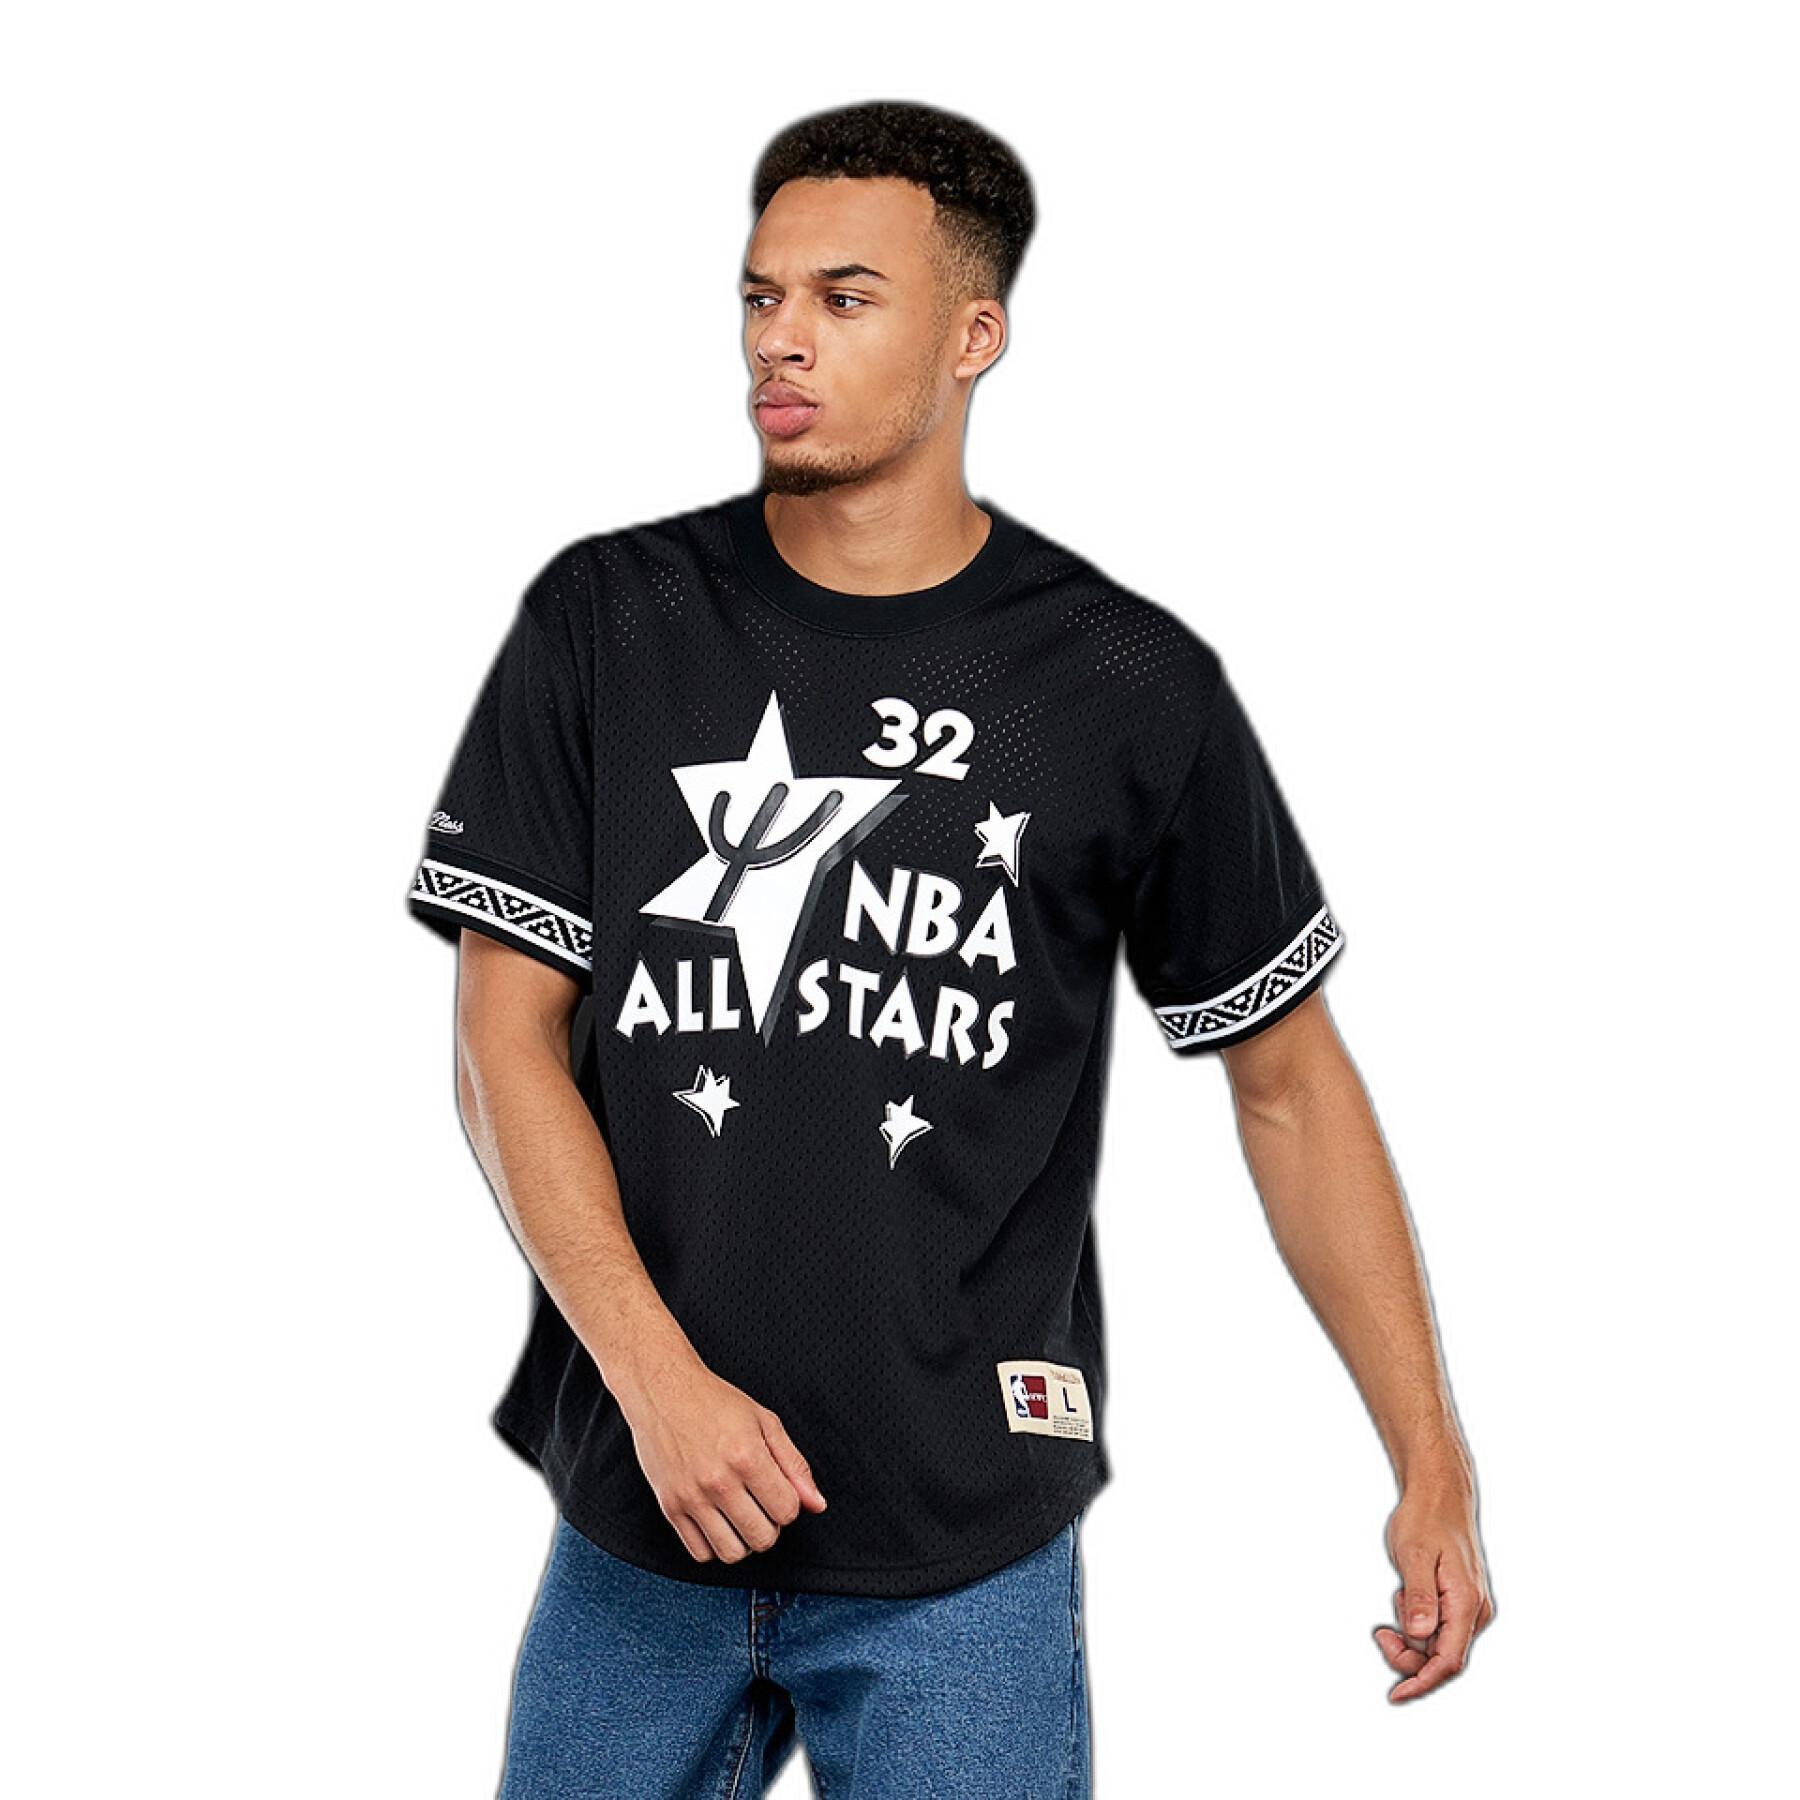 Camiseta NBA All Star East 1995 Shaquille O'Neal